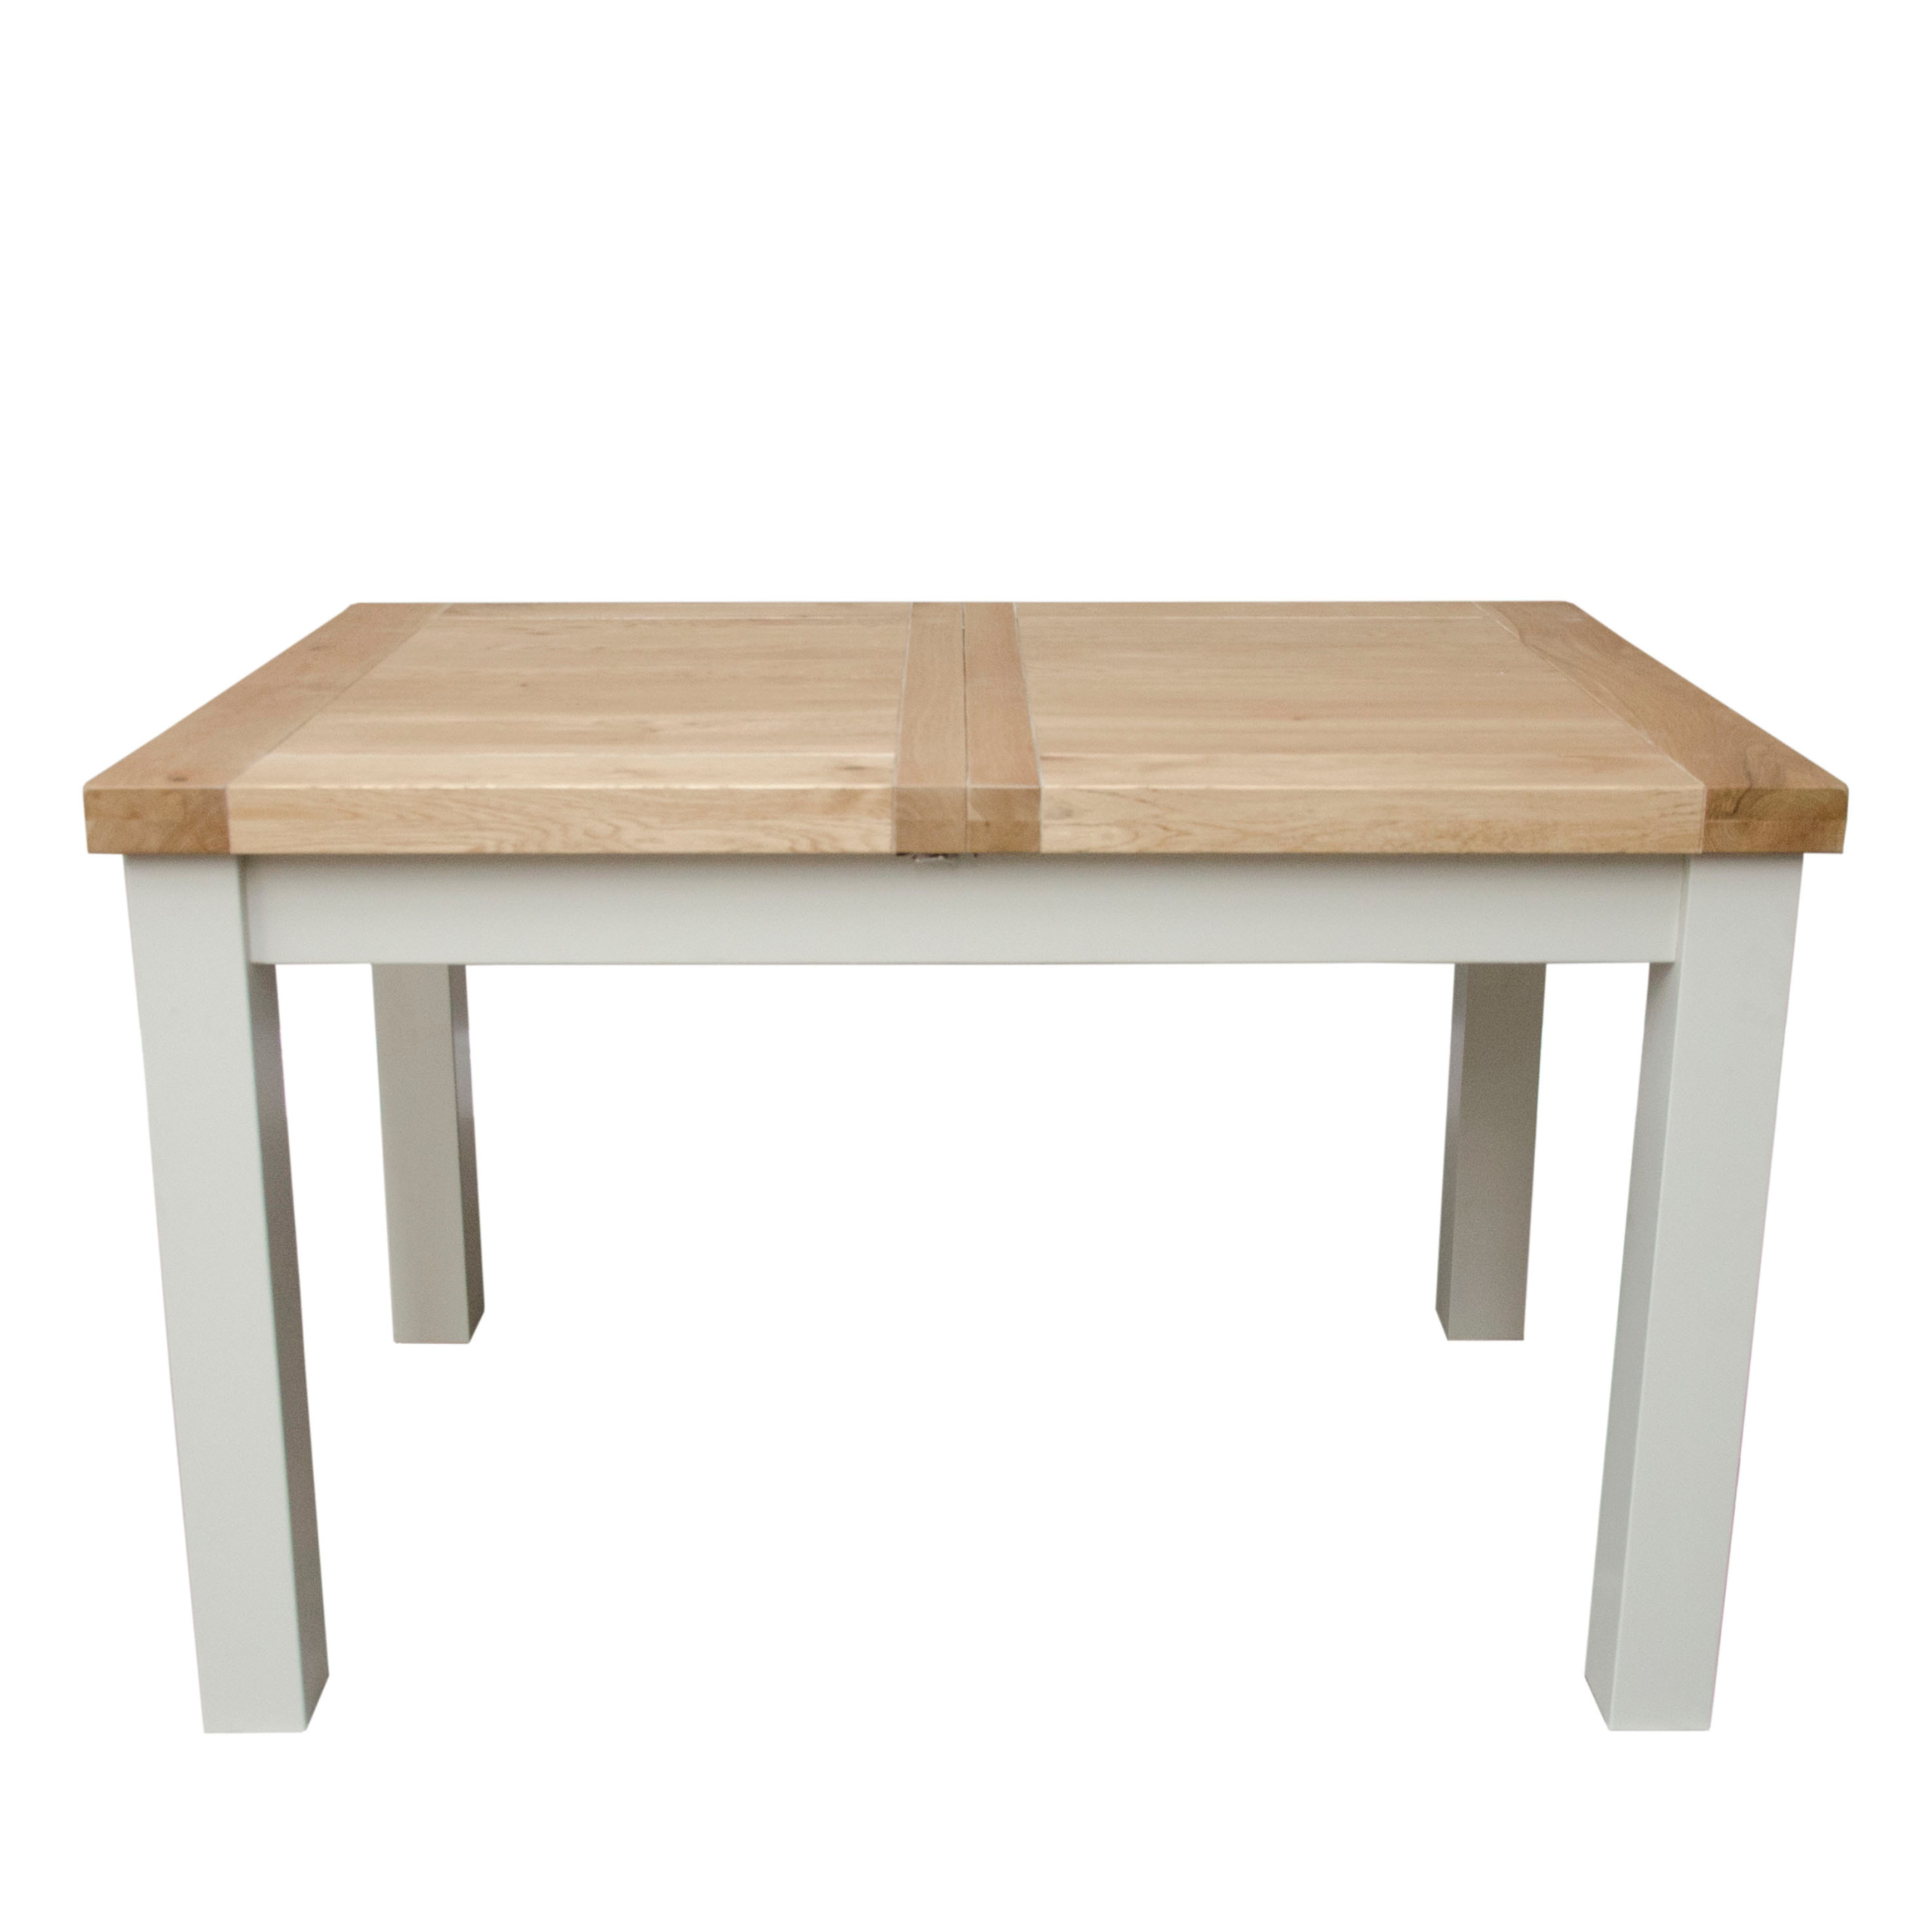 SIGNATURE Painted / Solid Oak Extending Dining Table 122cm - 162cm